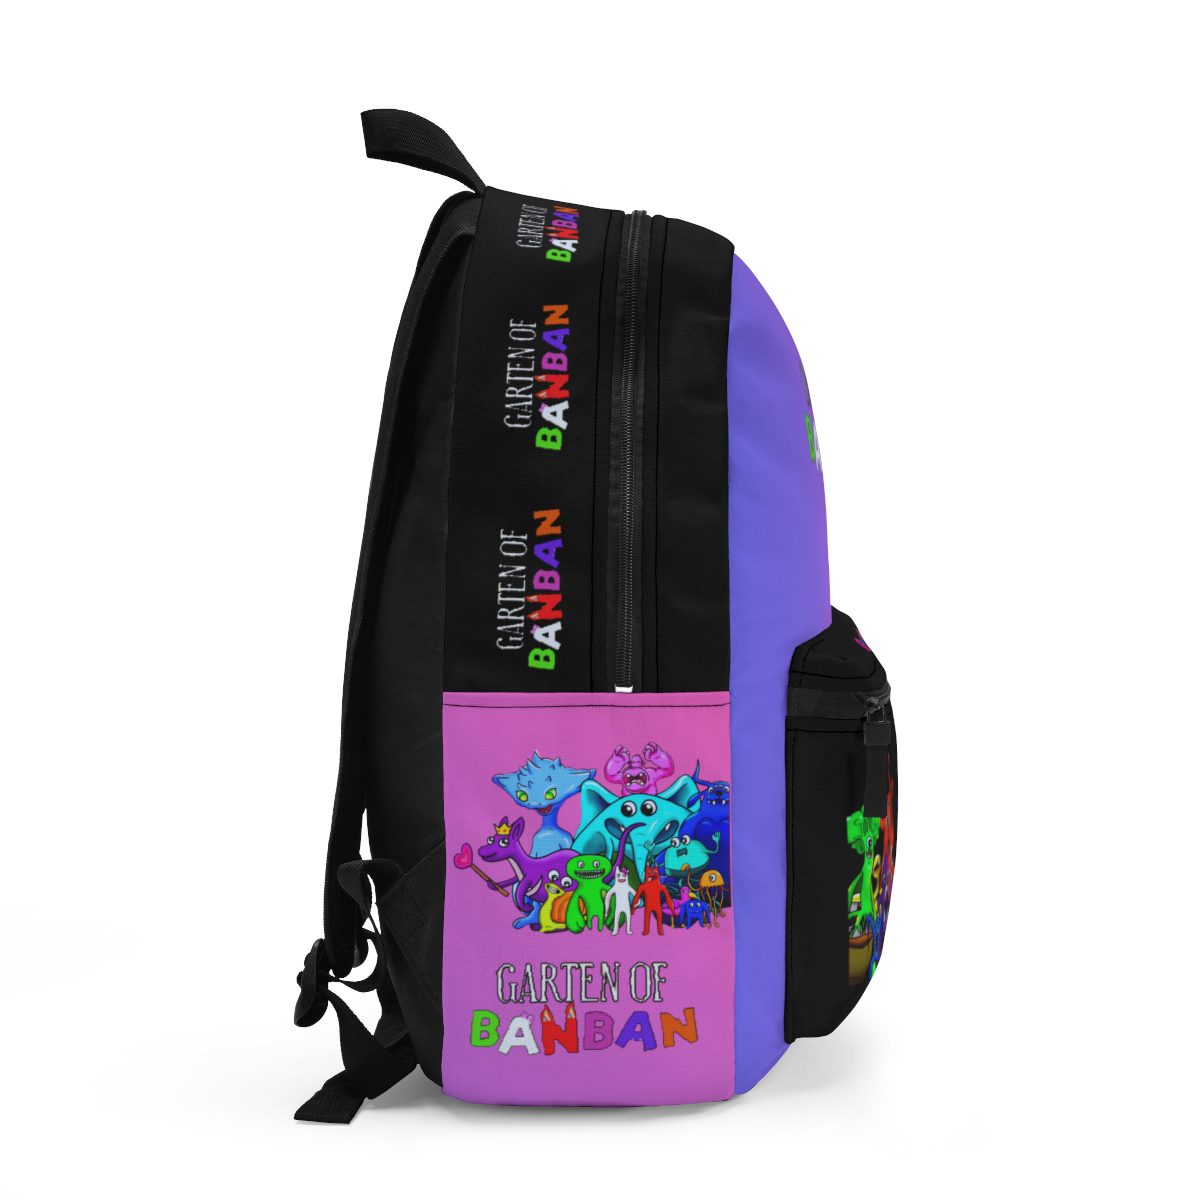 Garten of BanBan, Black and Purple Backpack Cool Kiddo 12